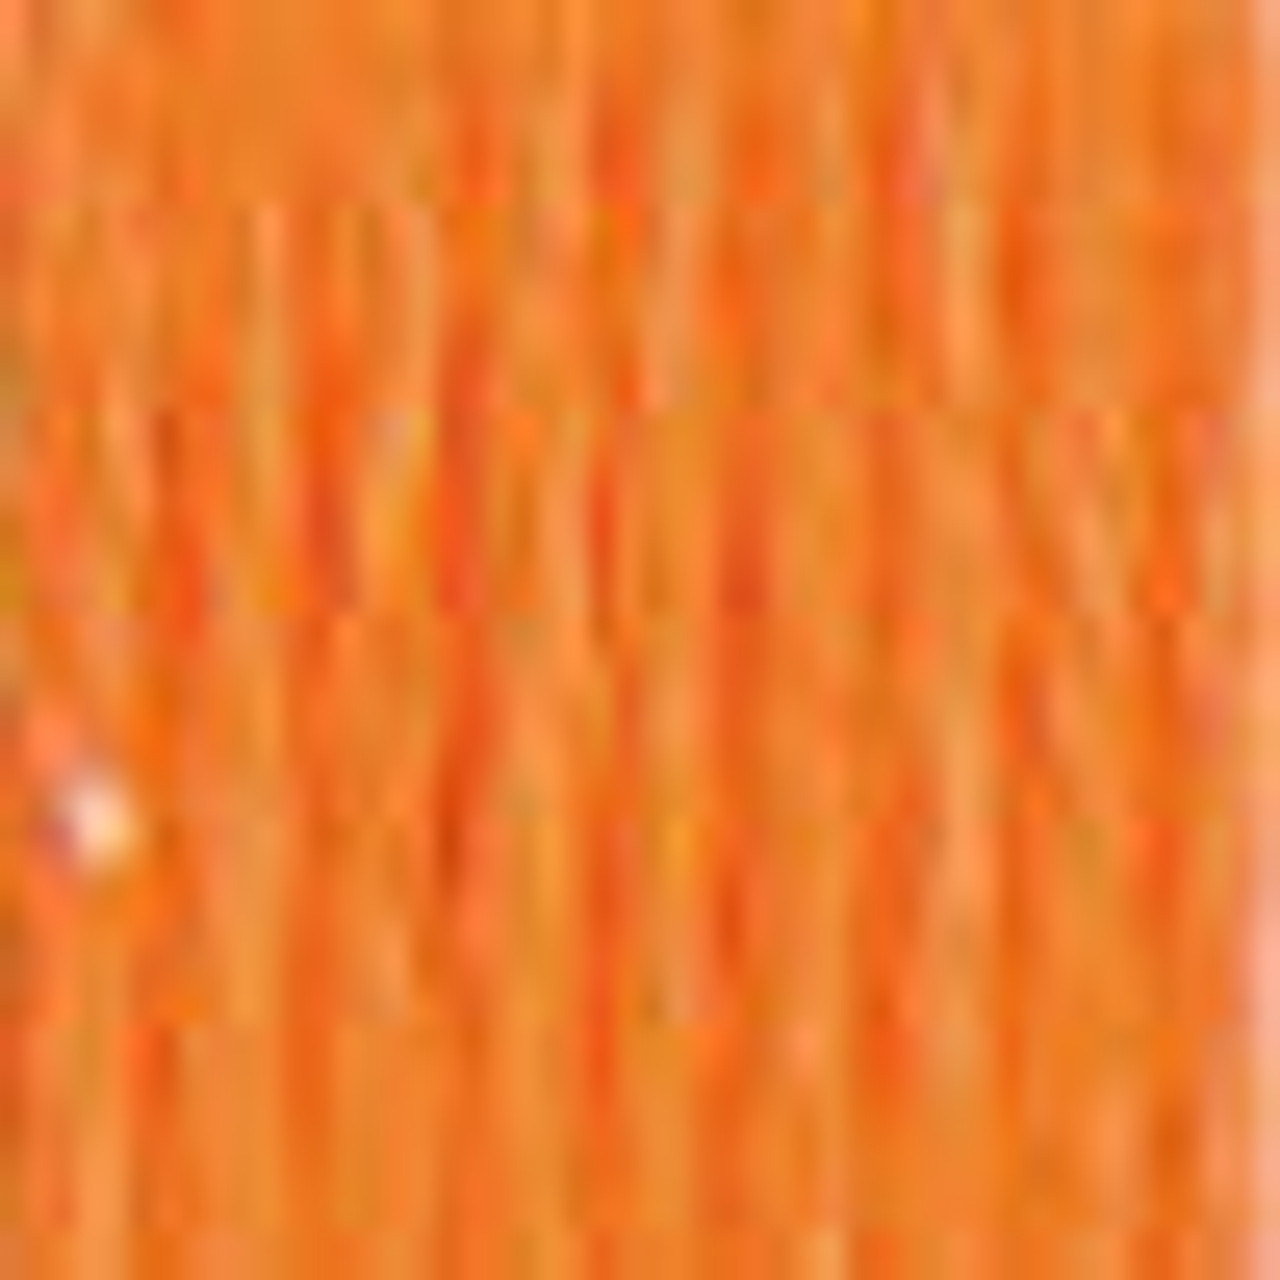 DMC # 721 Medium Orange Spice Floss / Thread